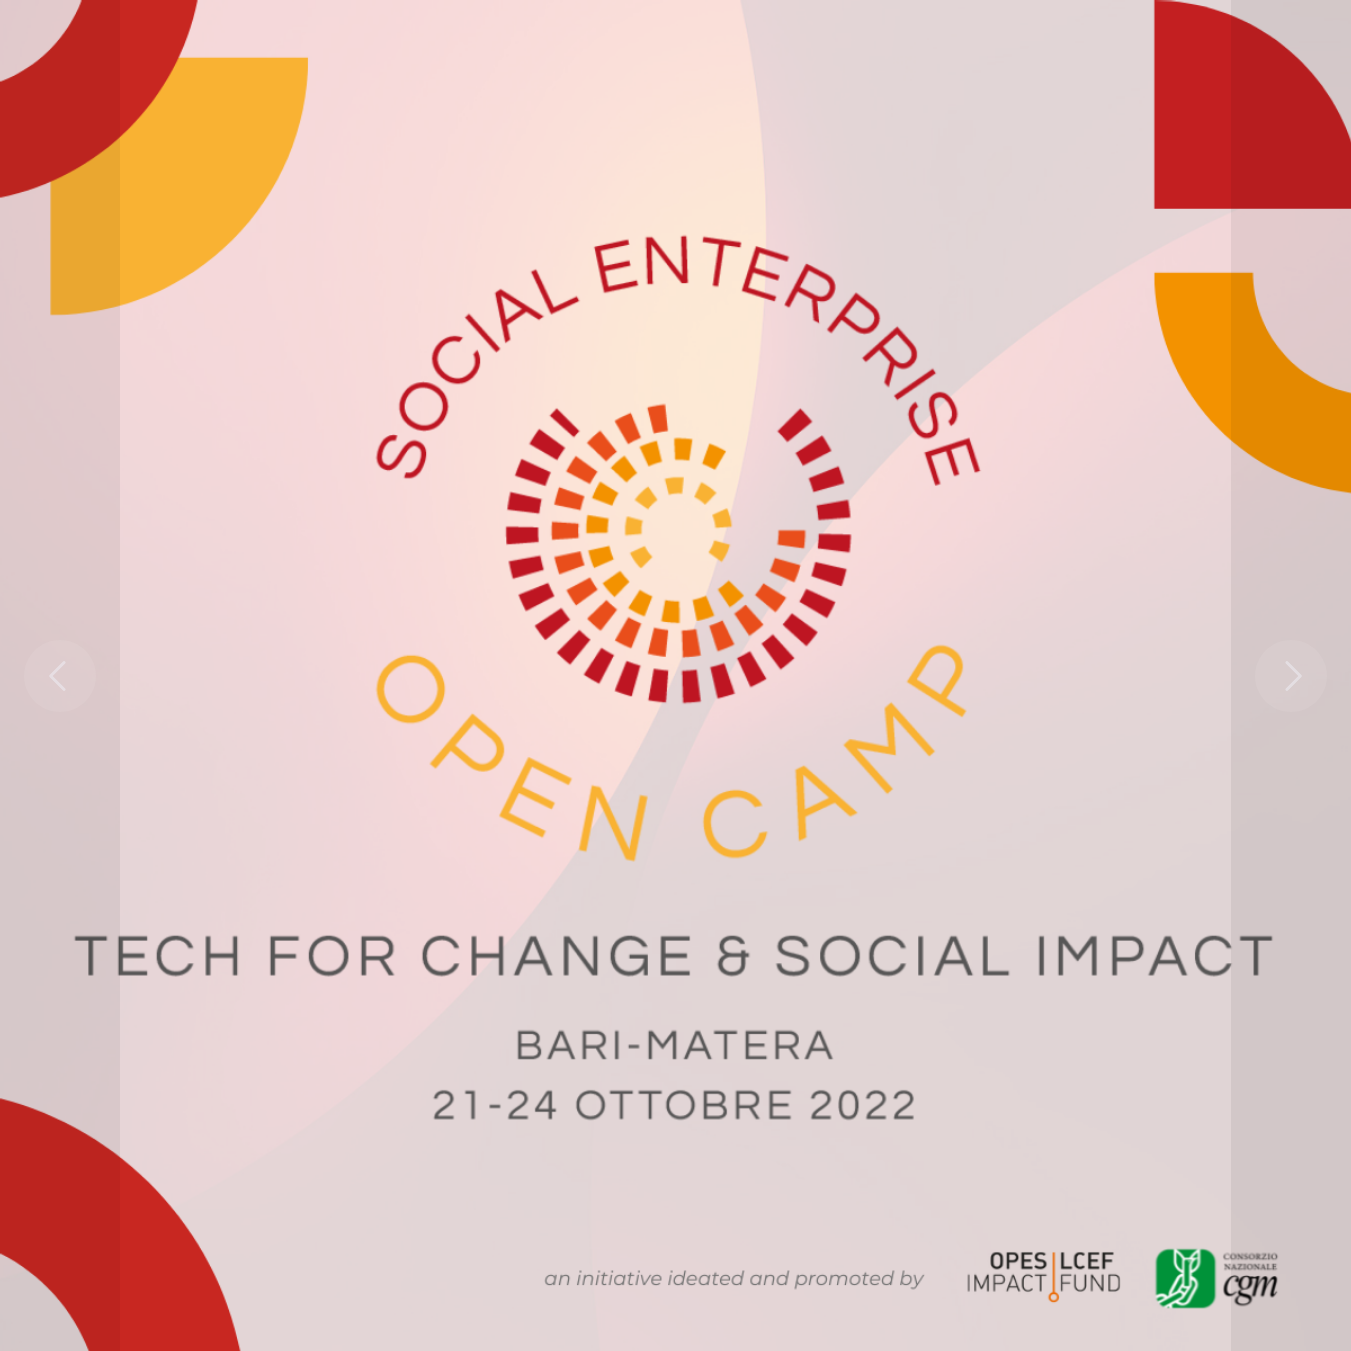 Social Enterprise Open Camp 2022 – Tech for Change & Social Impact